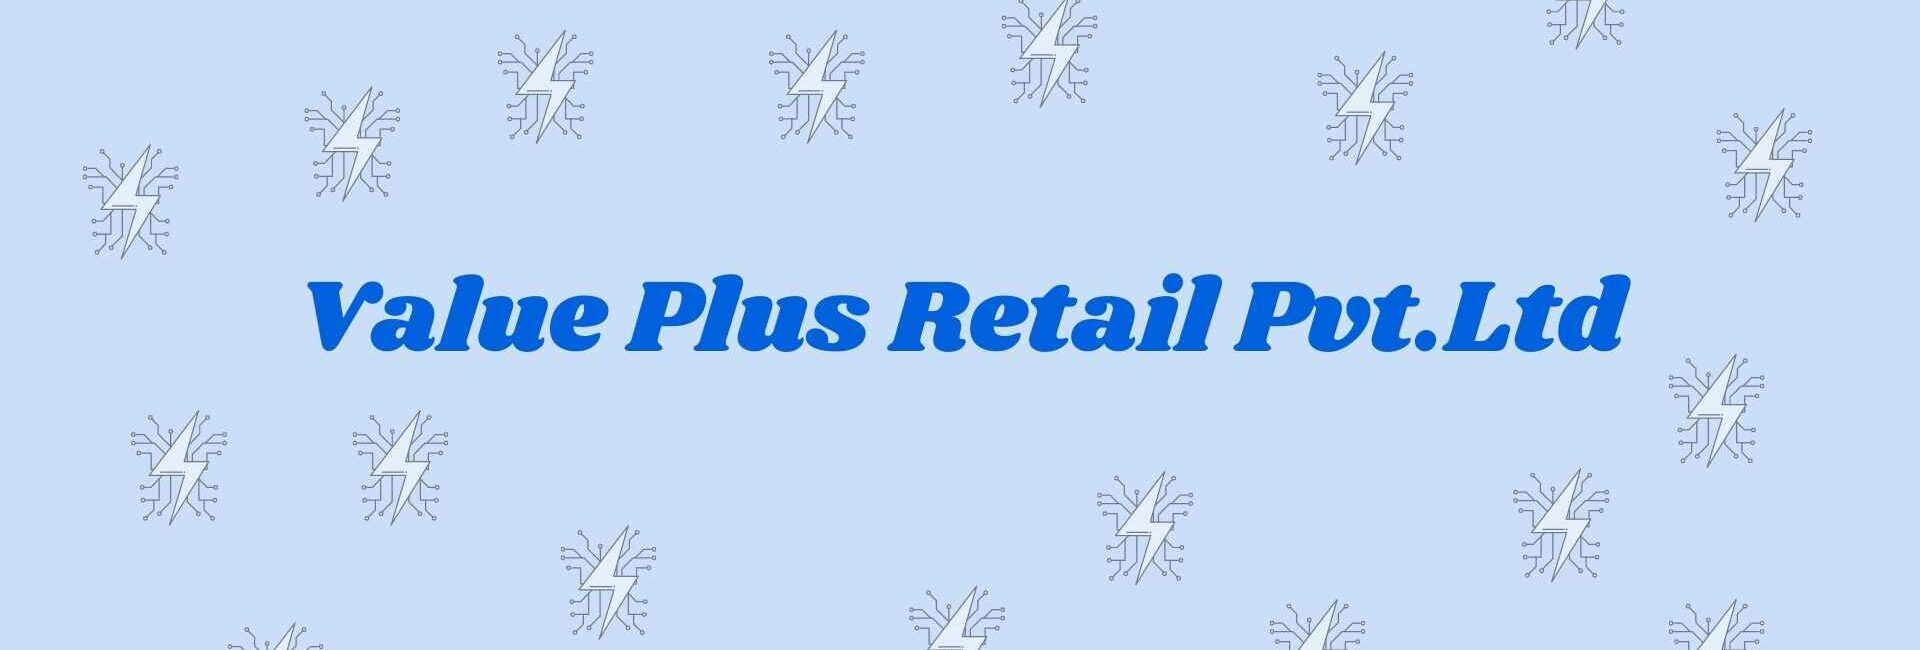 Value Plus Retail Pvt.Ltd - Electronics Goods Dealer in Noida